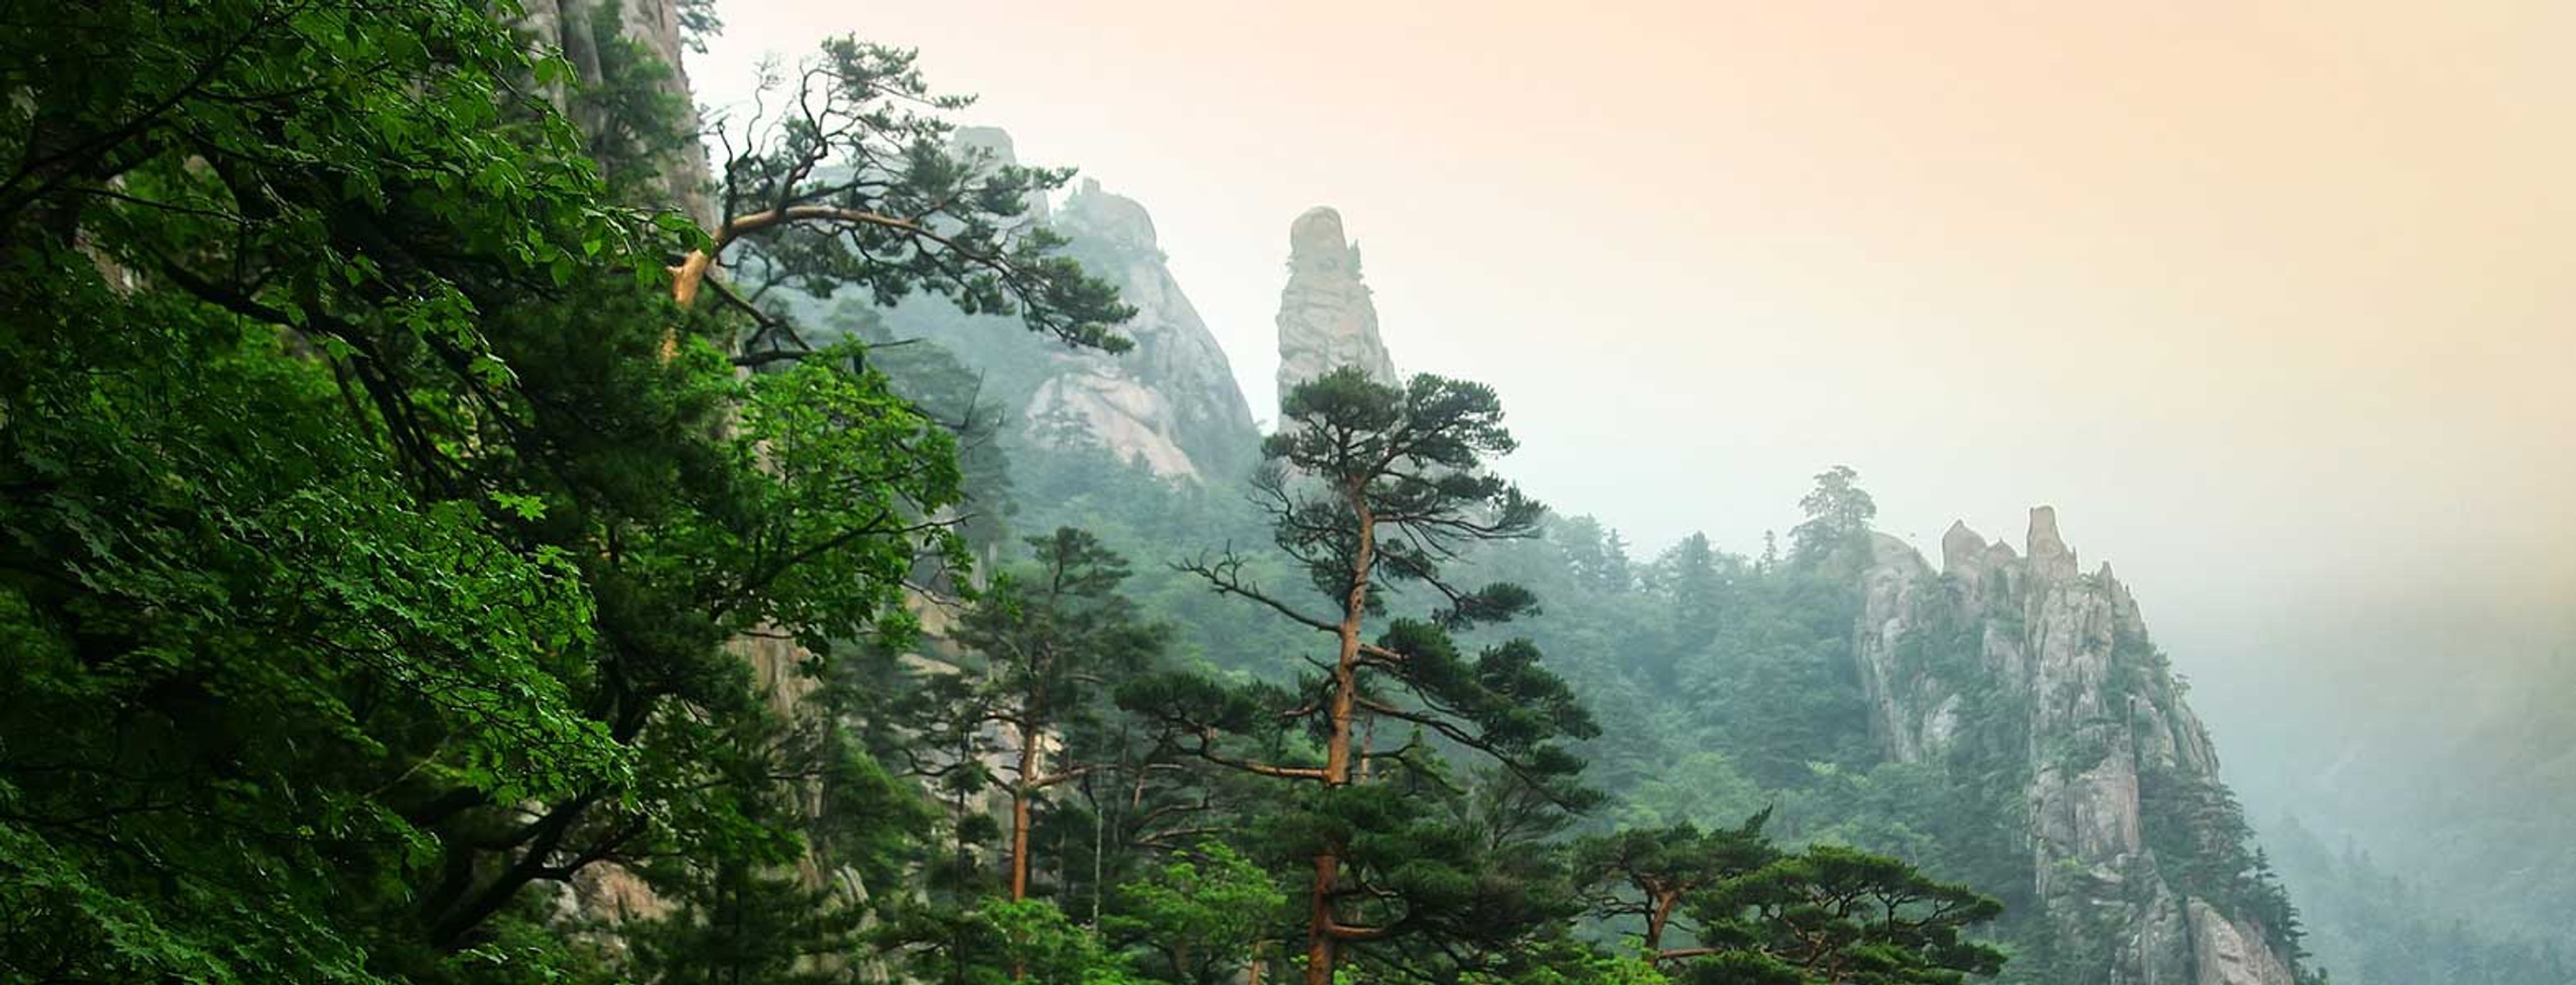 Idylle am Mt. Seoraksan 